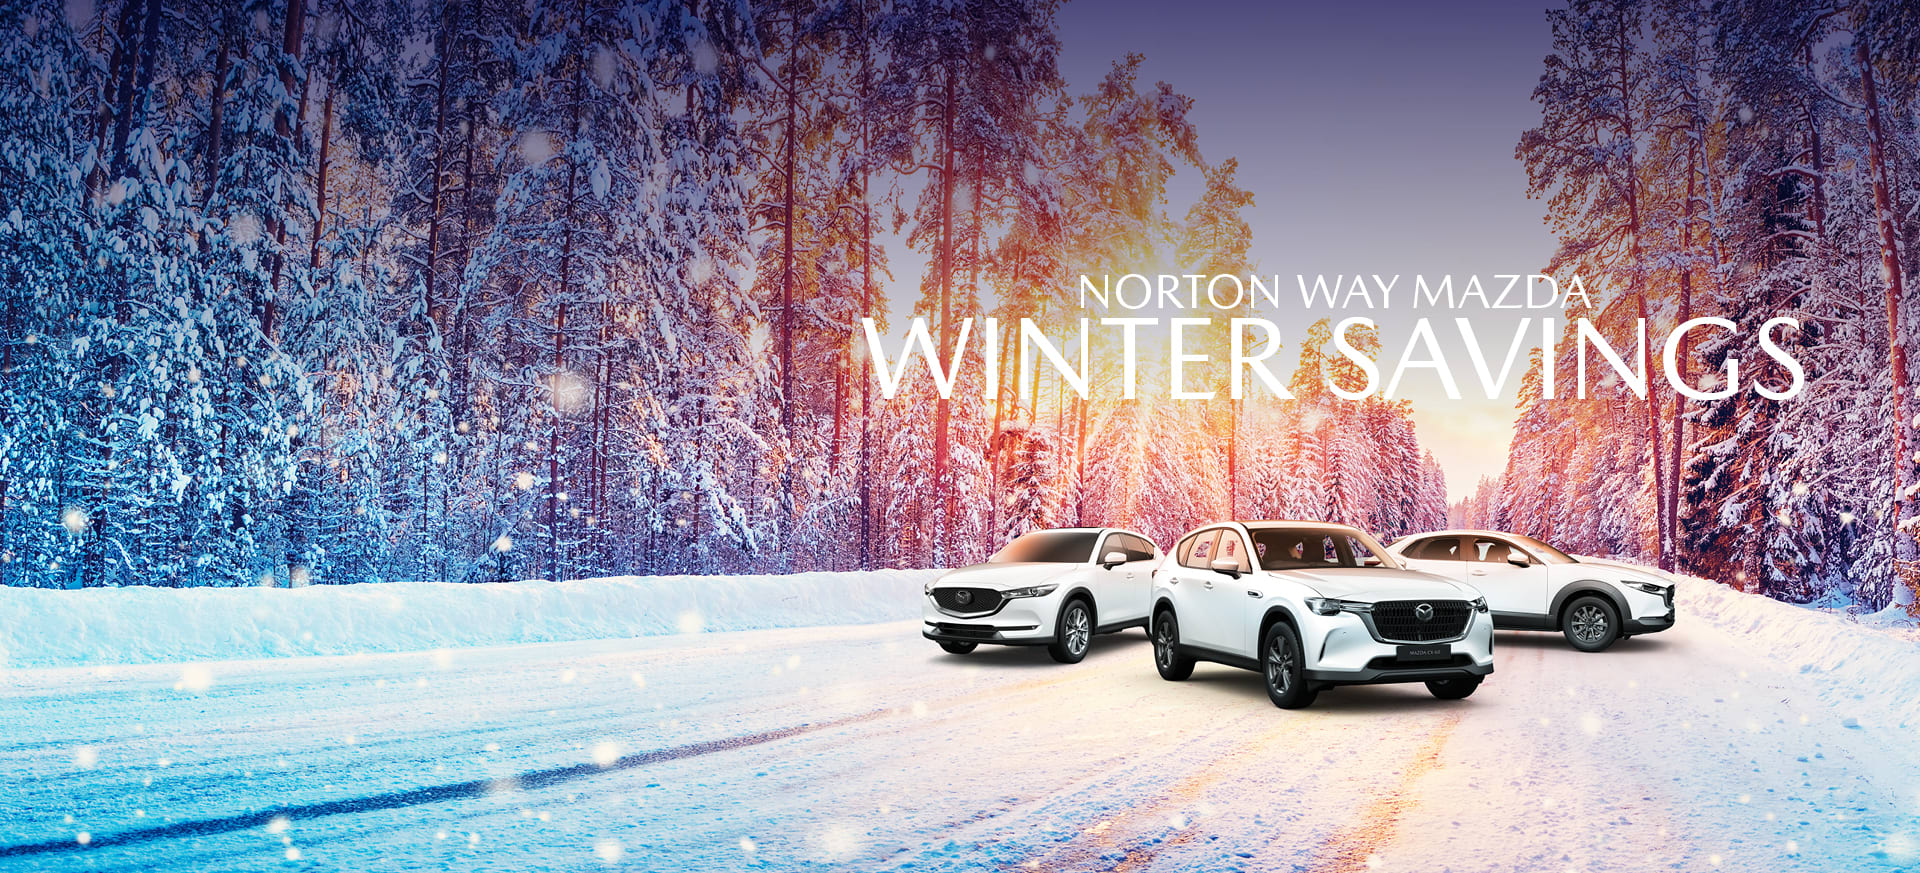 Norton Way Mazda Winter Savings